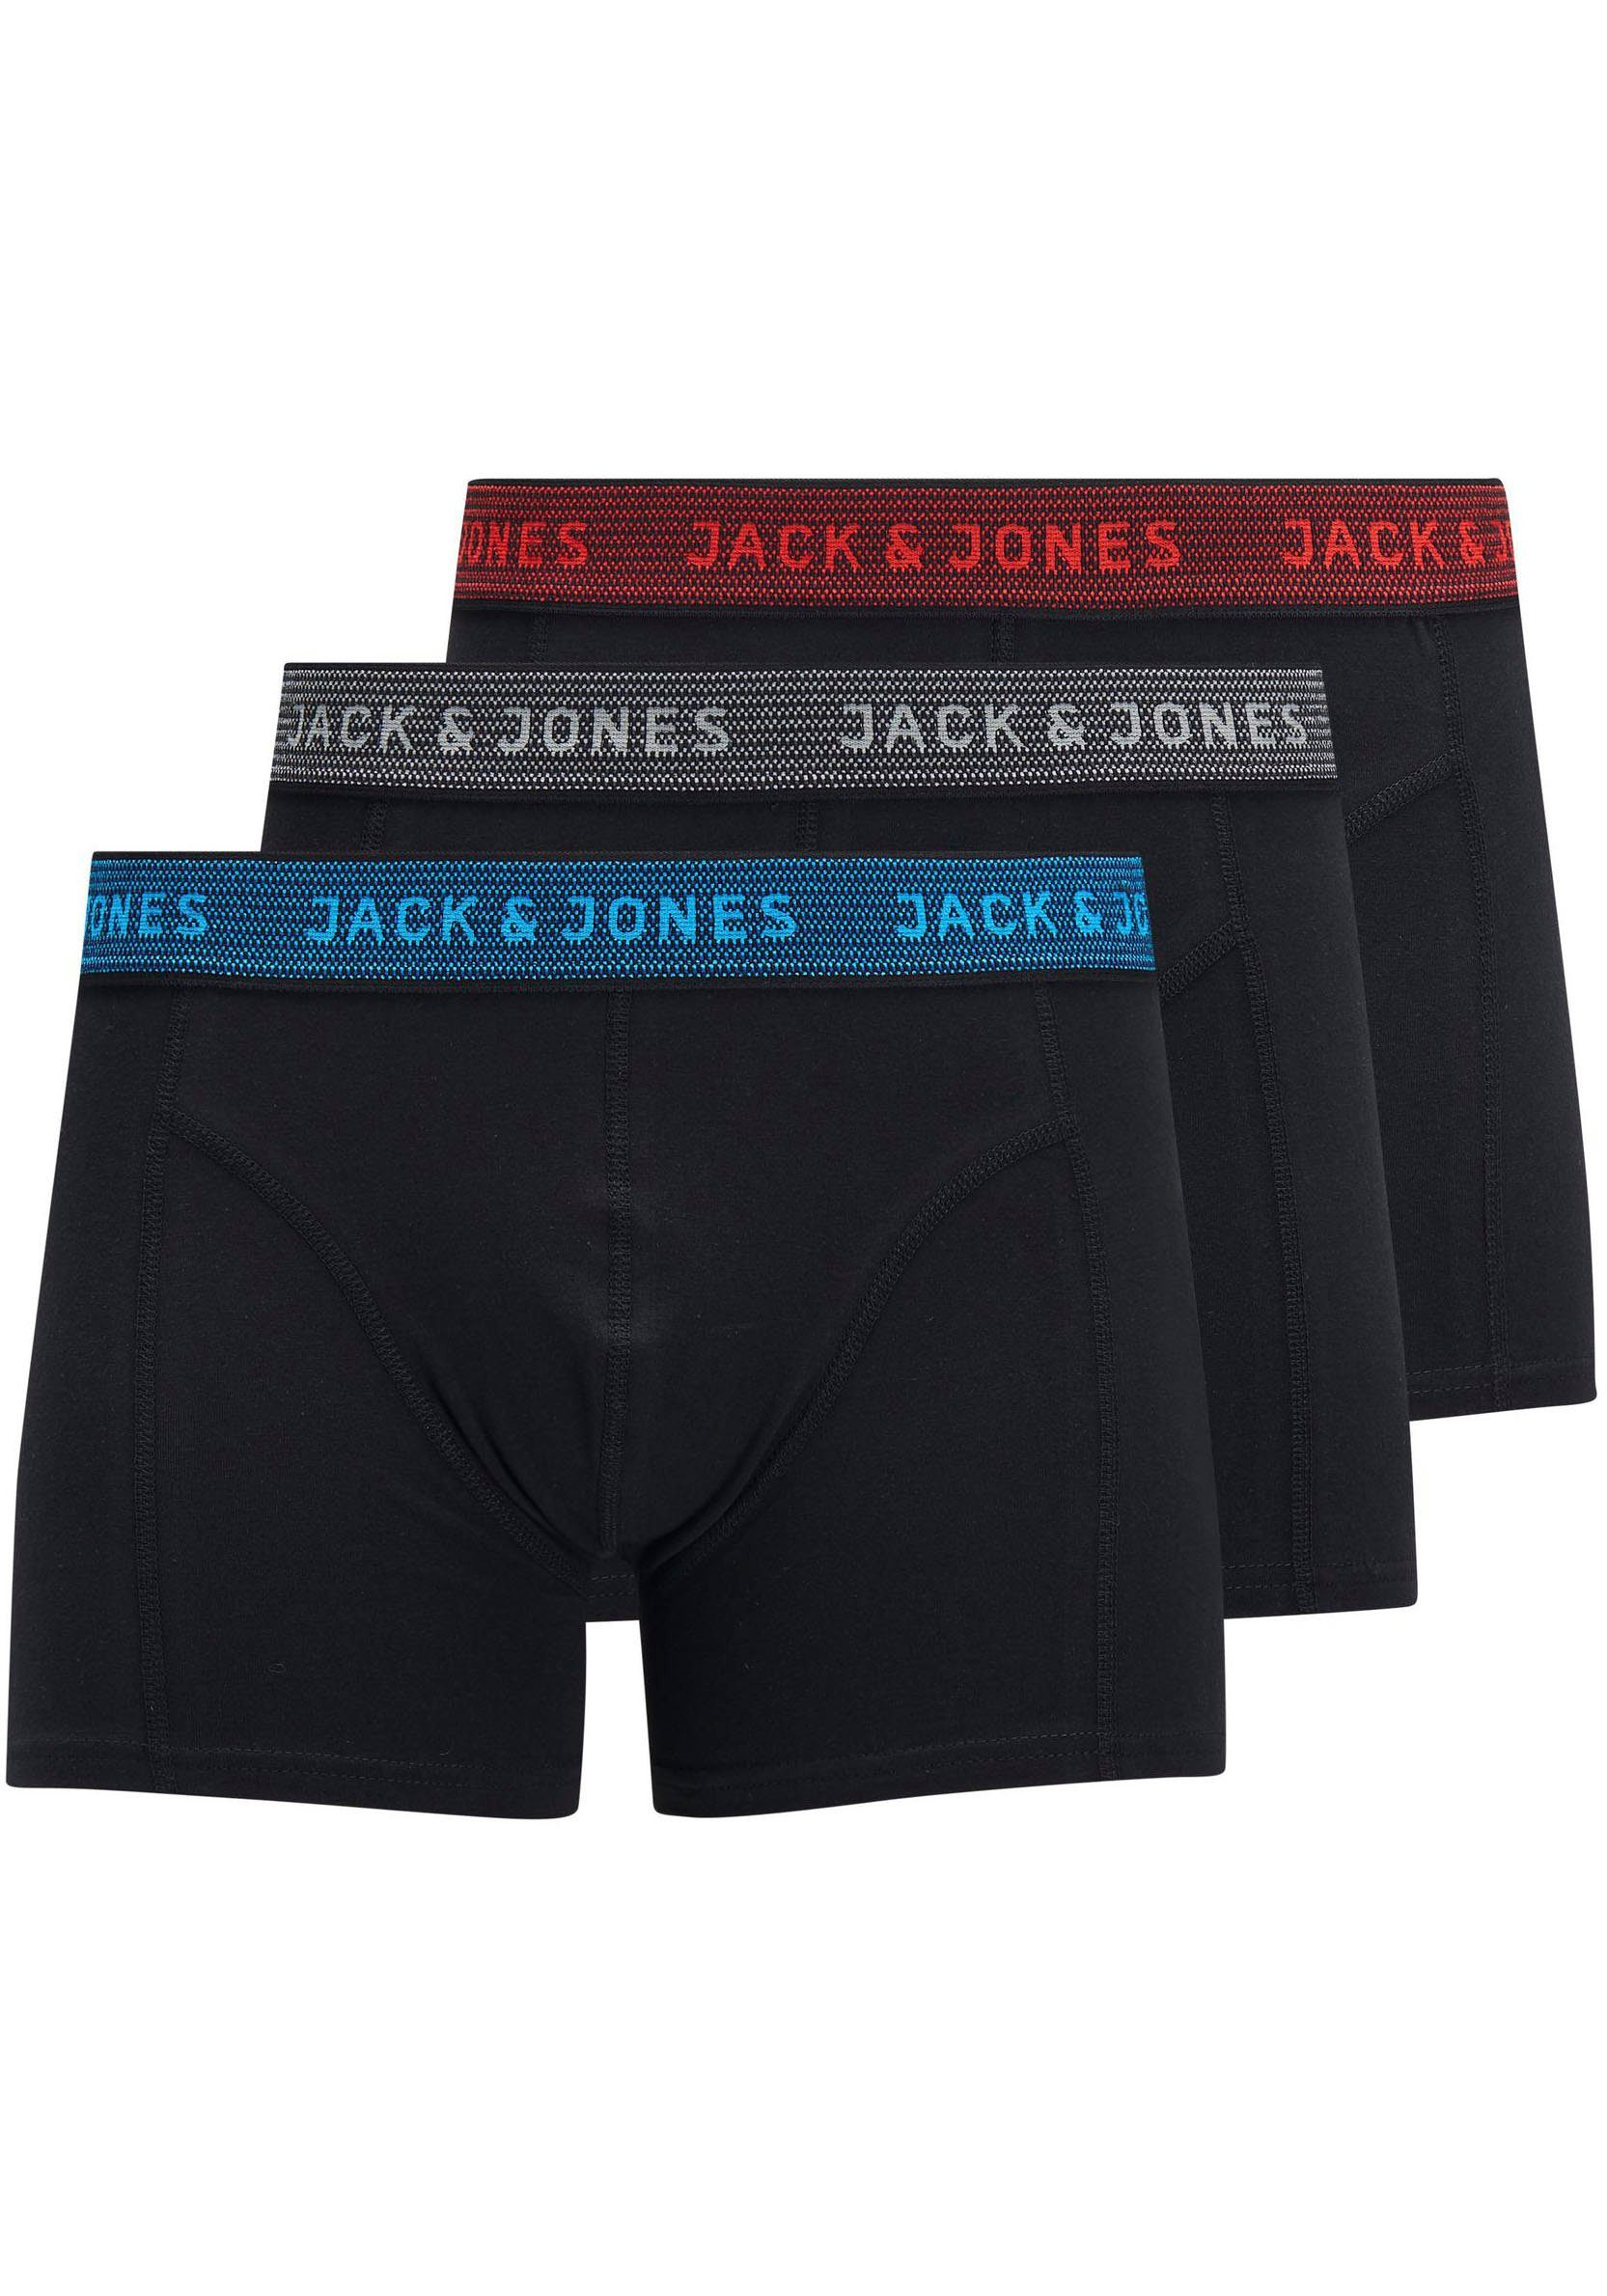 TRUNKS Jones 3-St) PAC 3 & JACWAISTBAND (Packung, Jack Boxershorts Junior